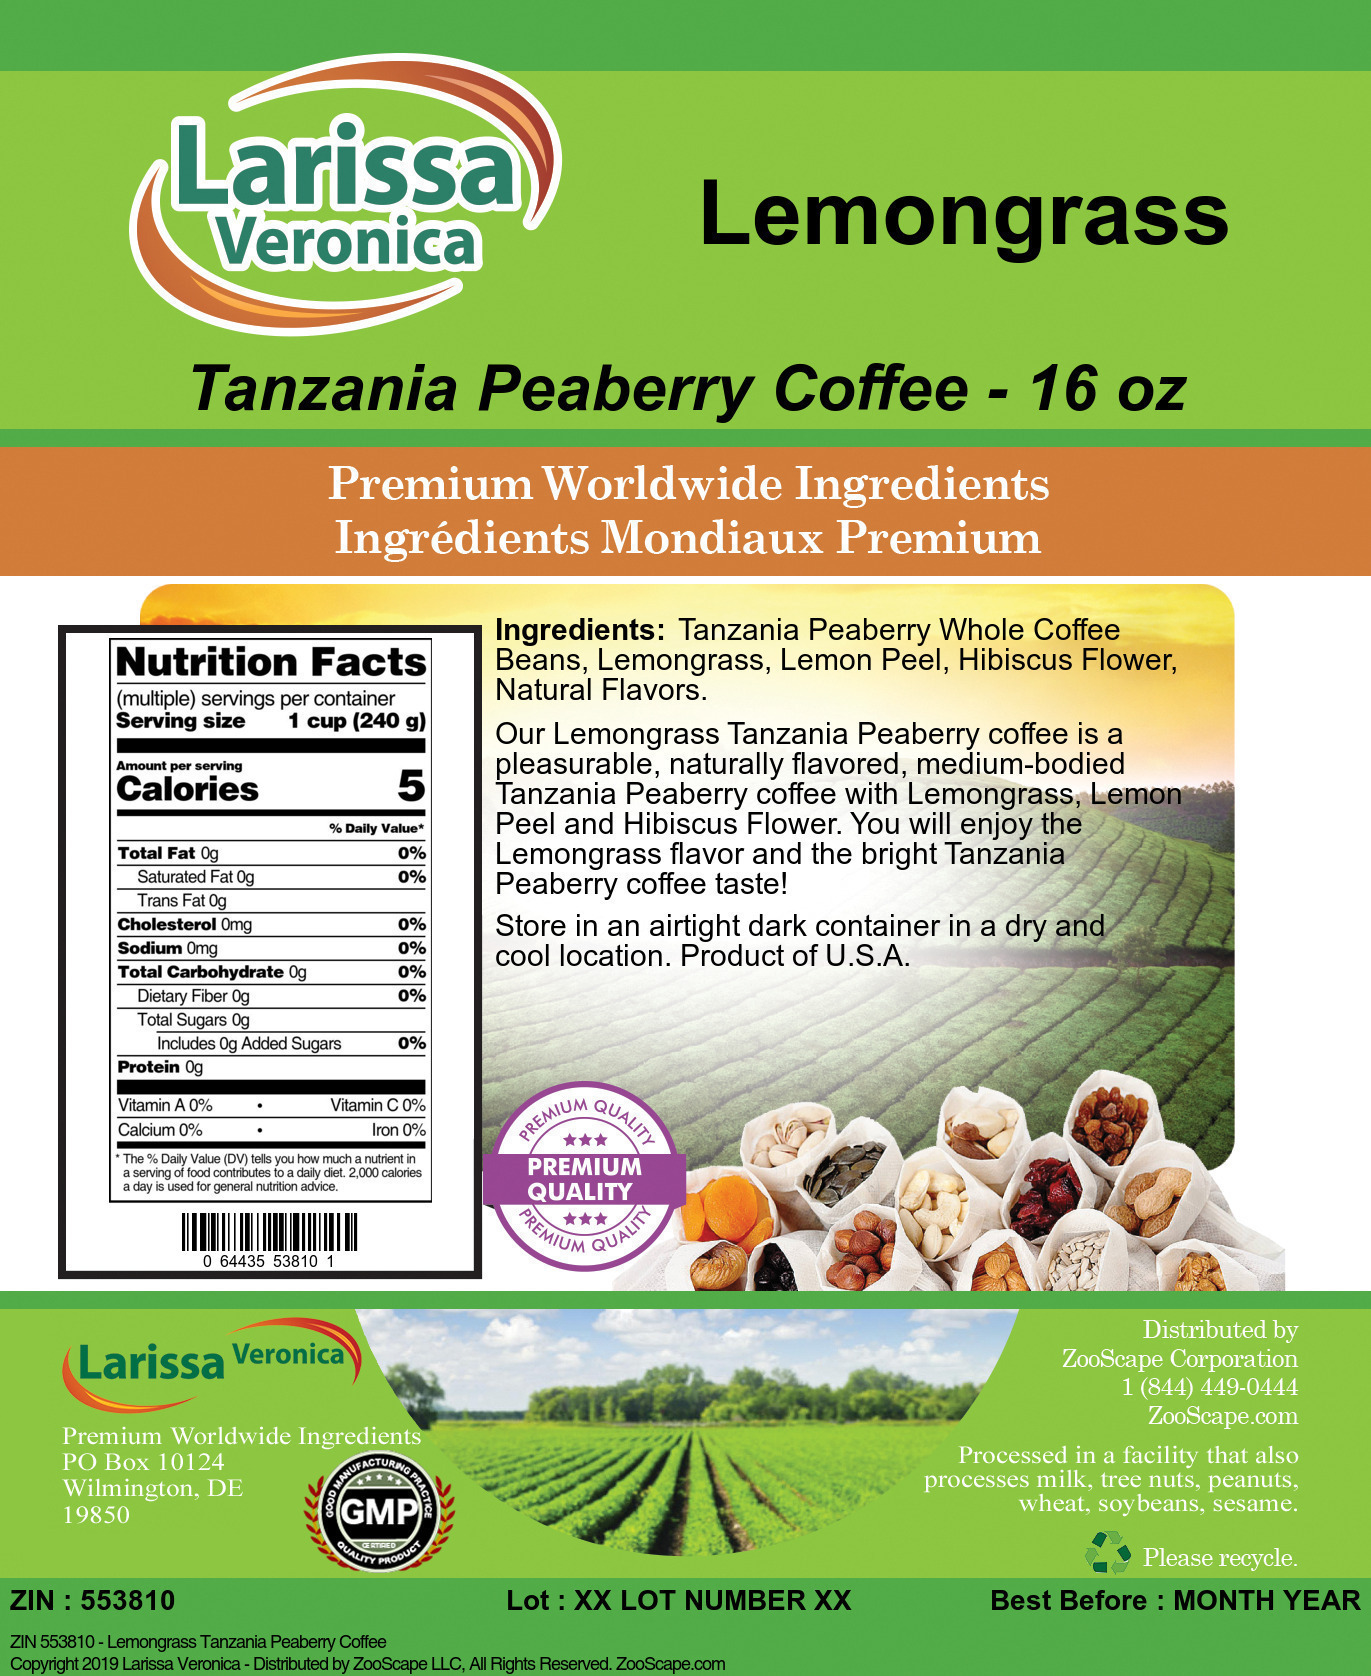 Lemongrass Tanzania Peaberry Coffee - Label